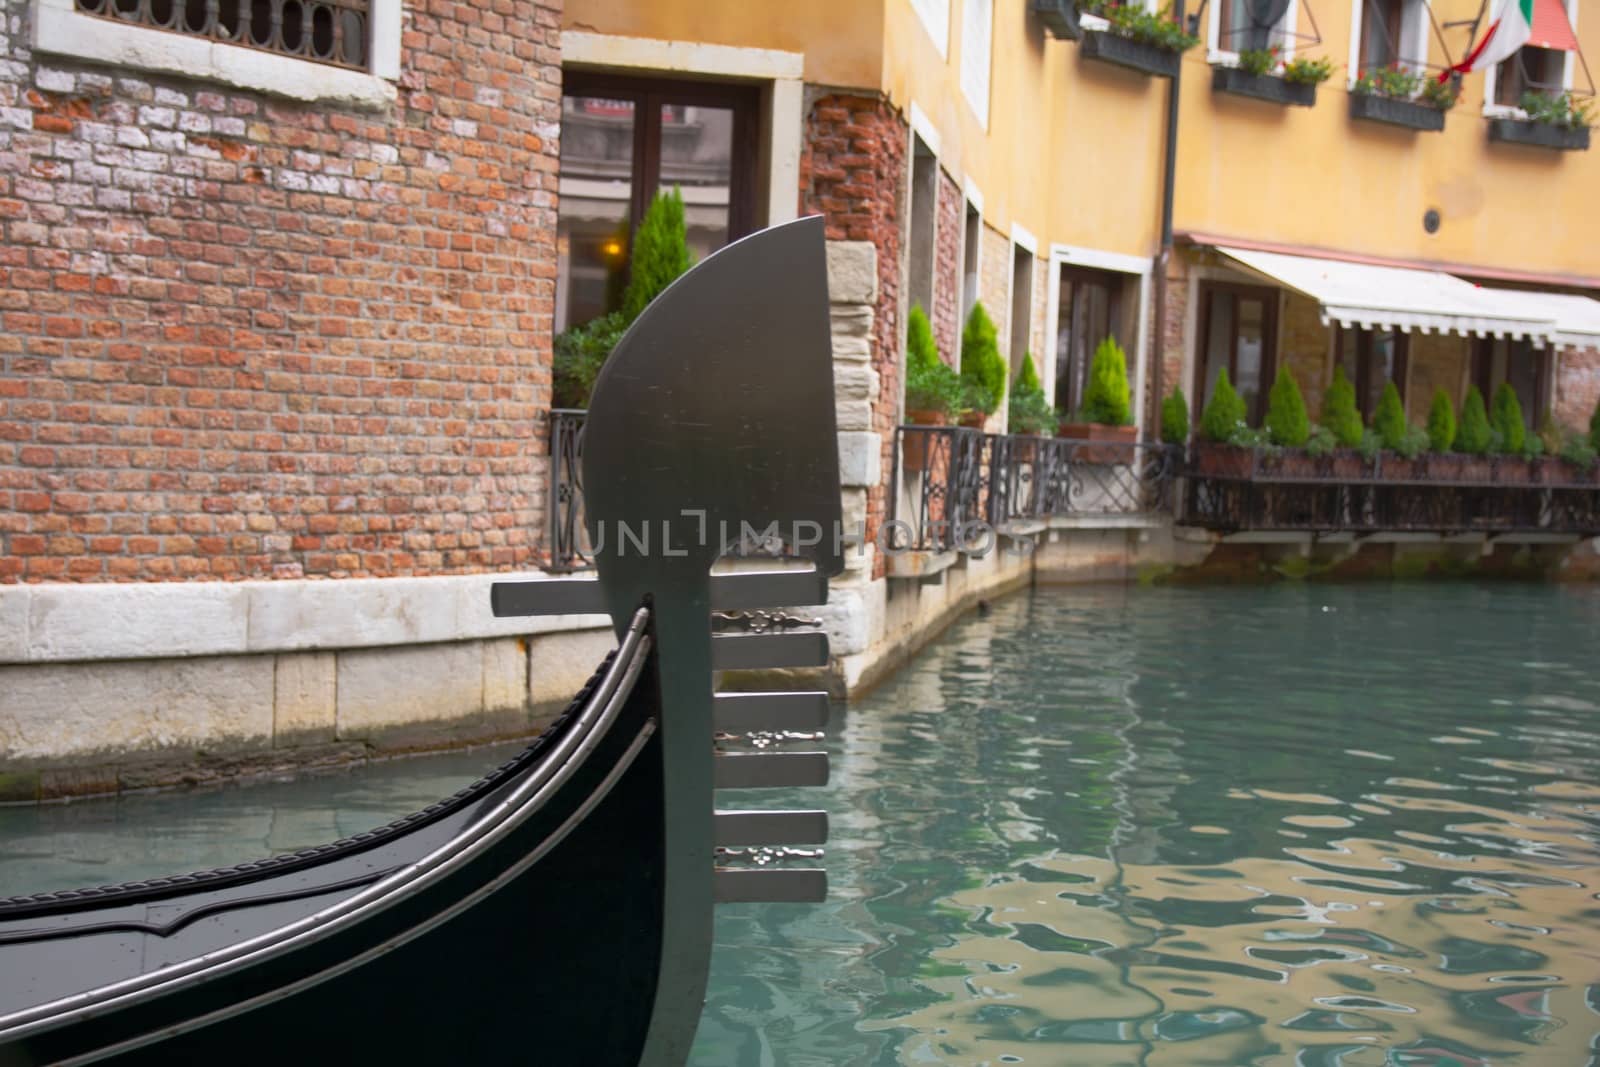 Gondola sailing through a canal in Venice. by CreativePhotoSpain